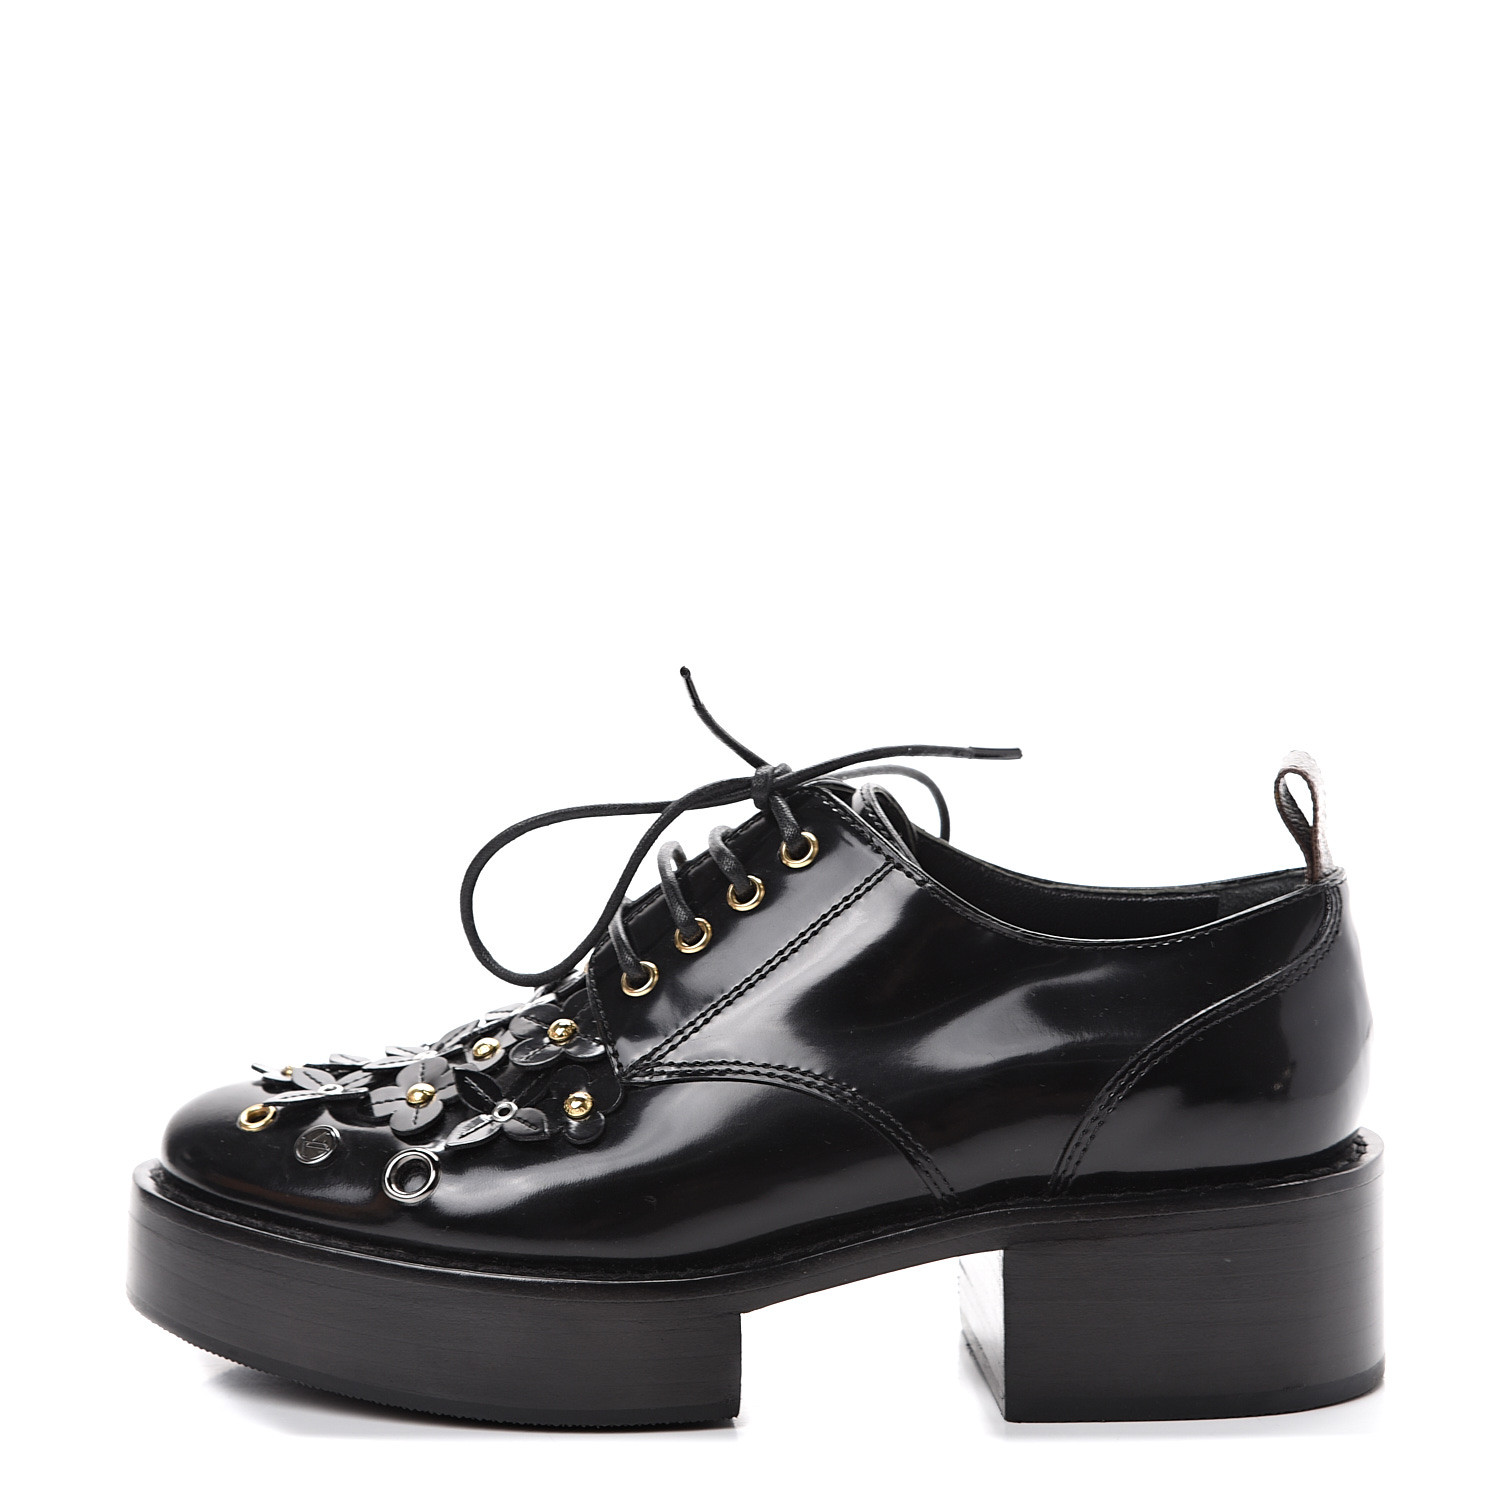 flat platform shoes black